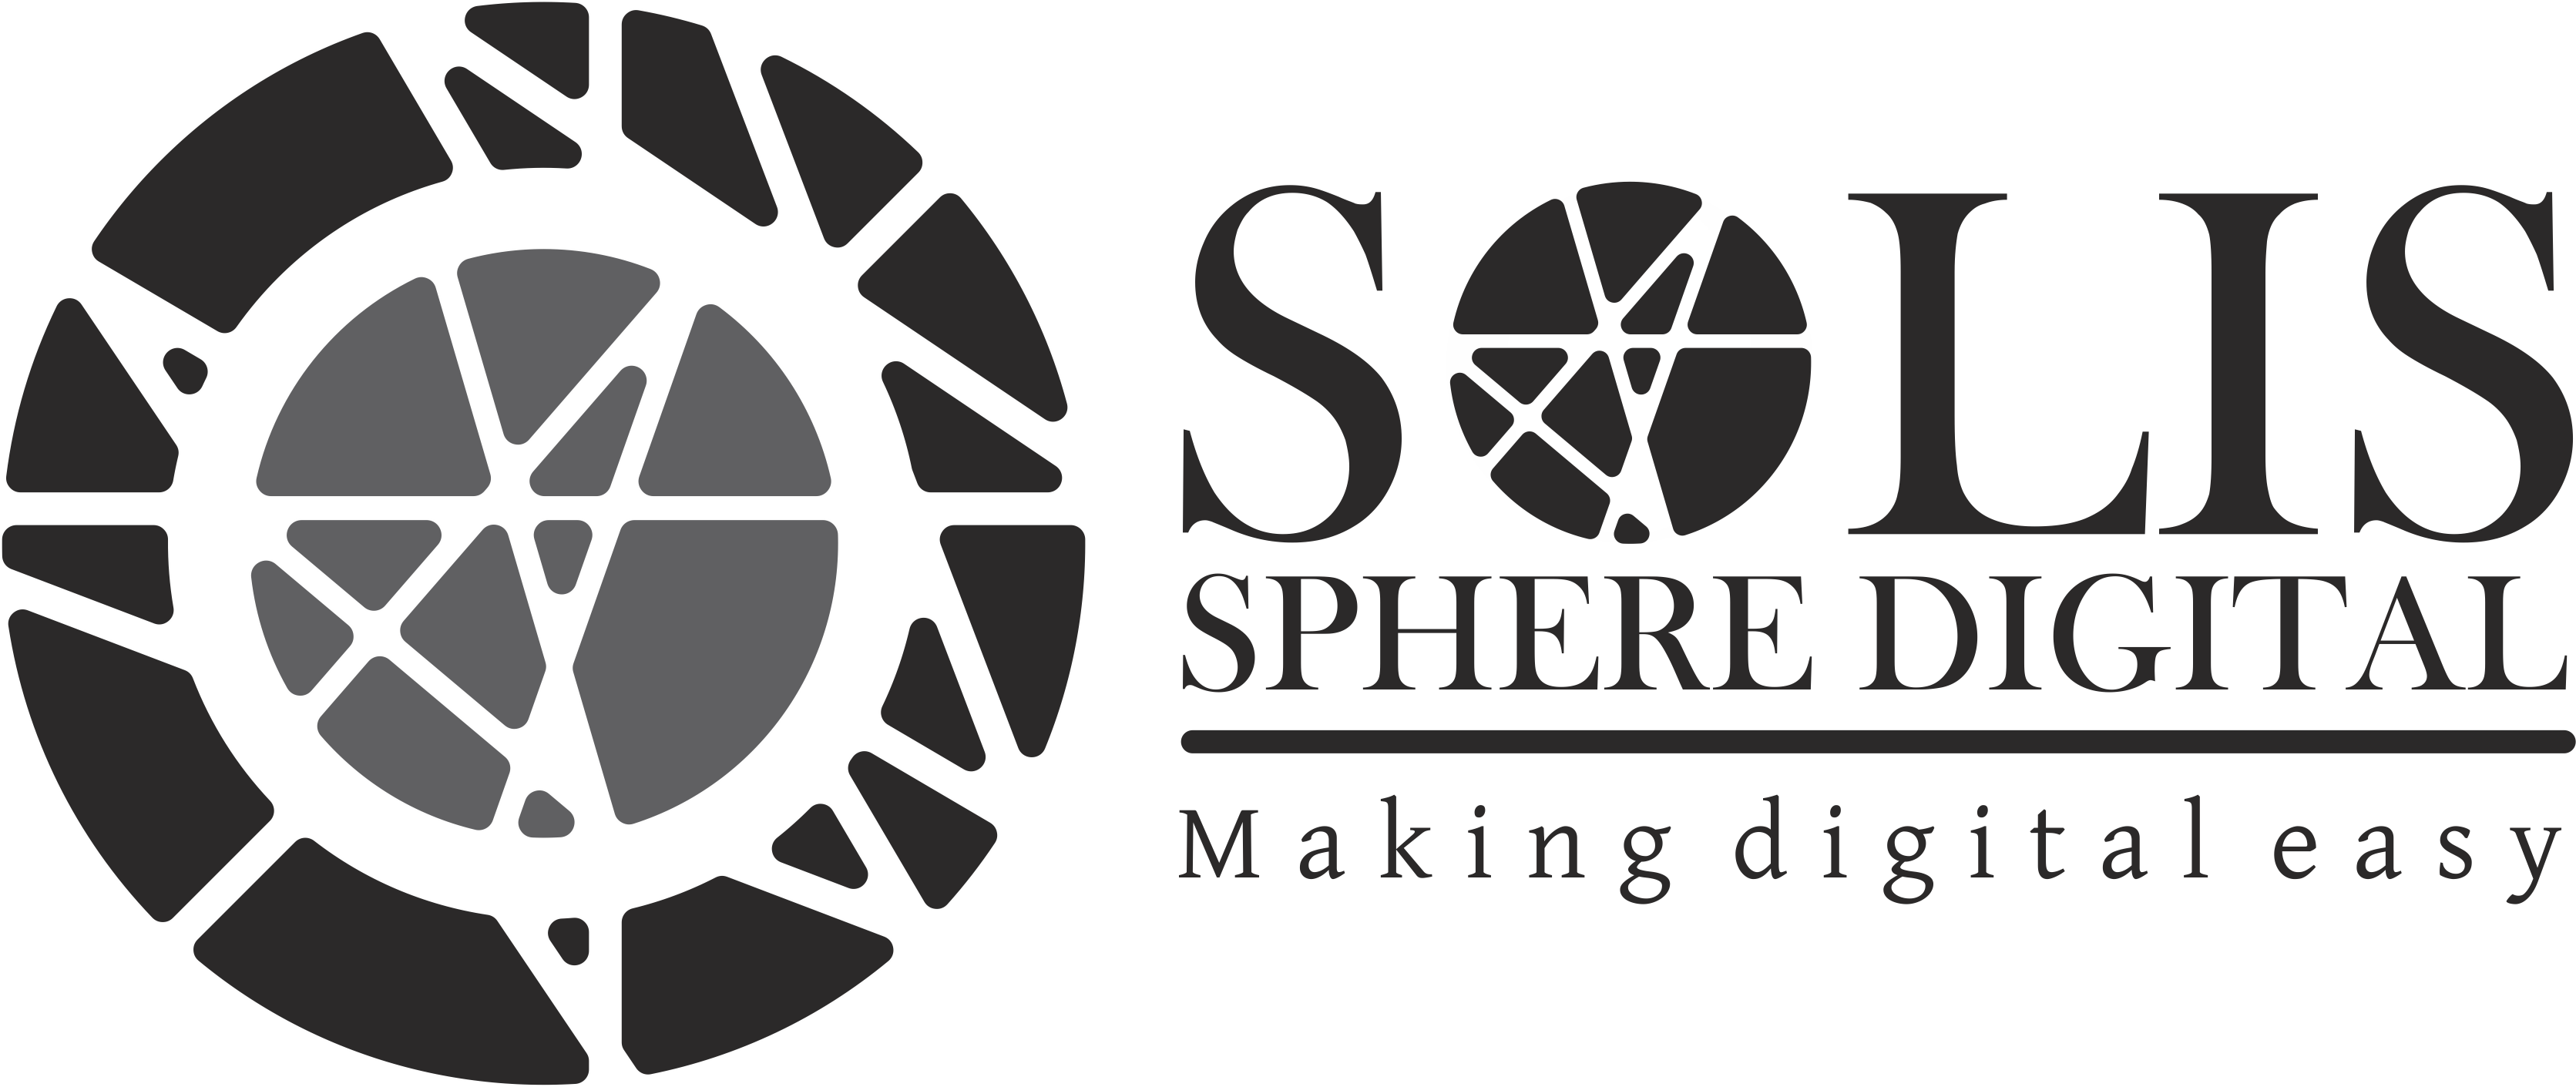 Solis Sphere Digital Logo.